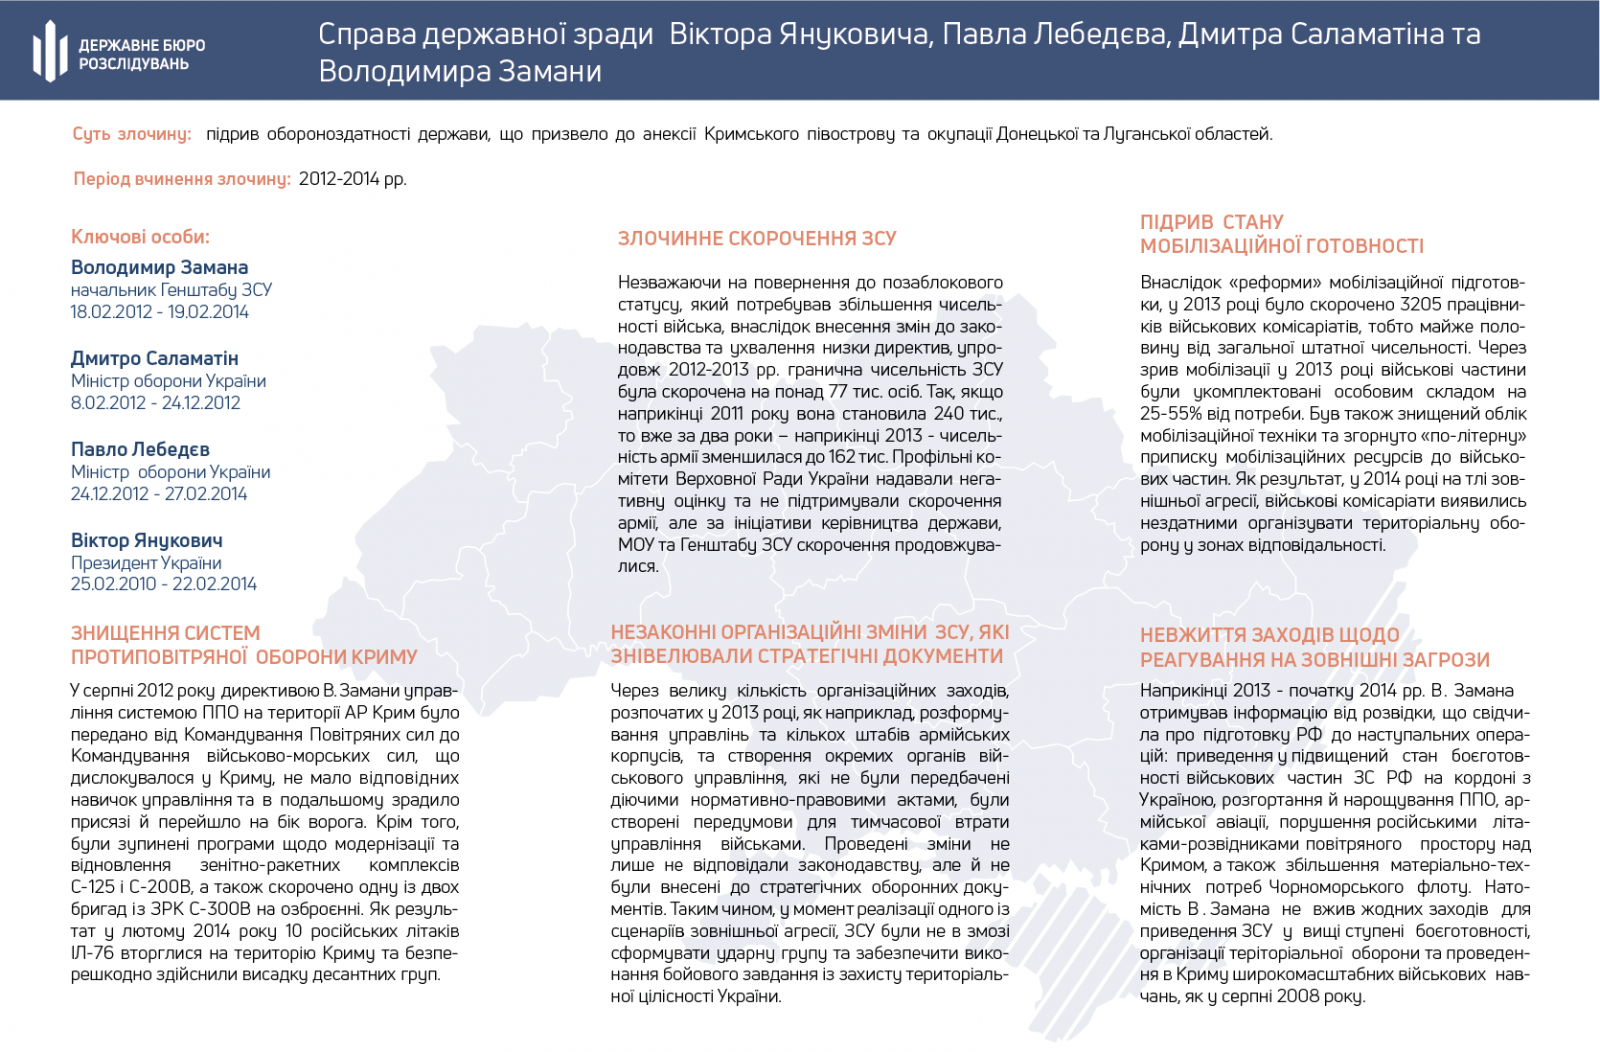 Пять причин потери Крыма назвали в ГБР. Фото: ГБР